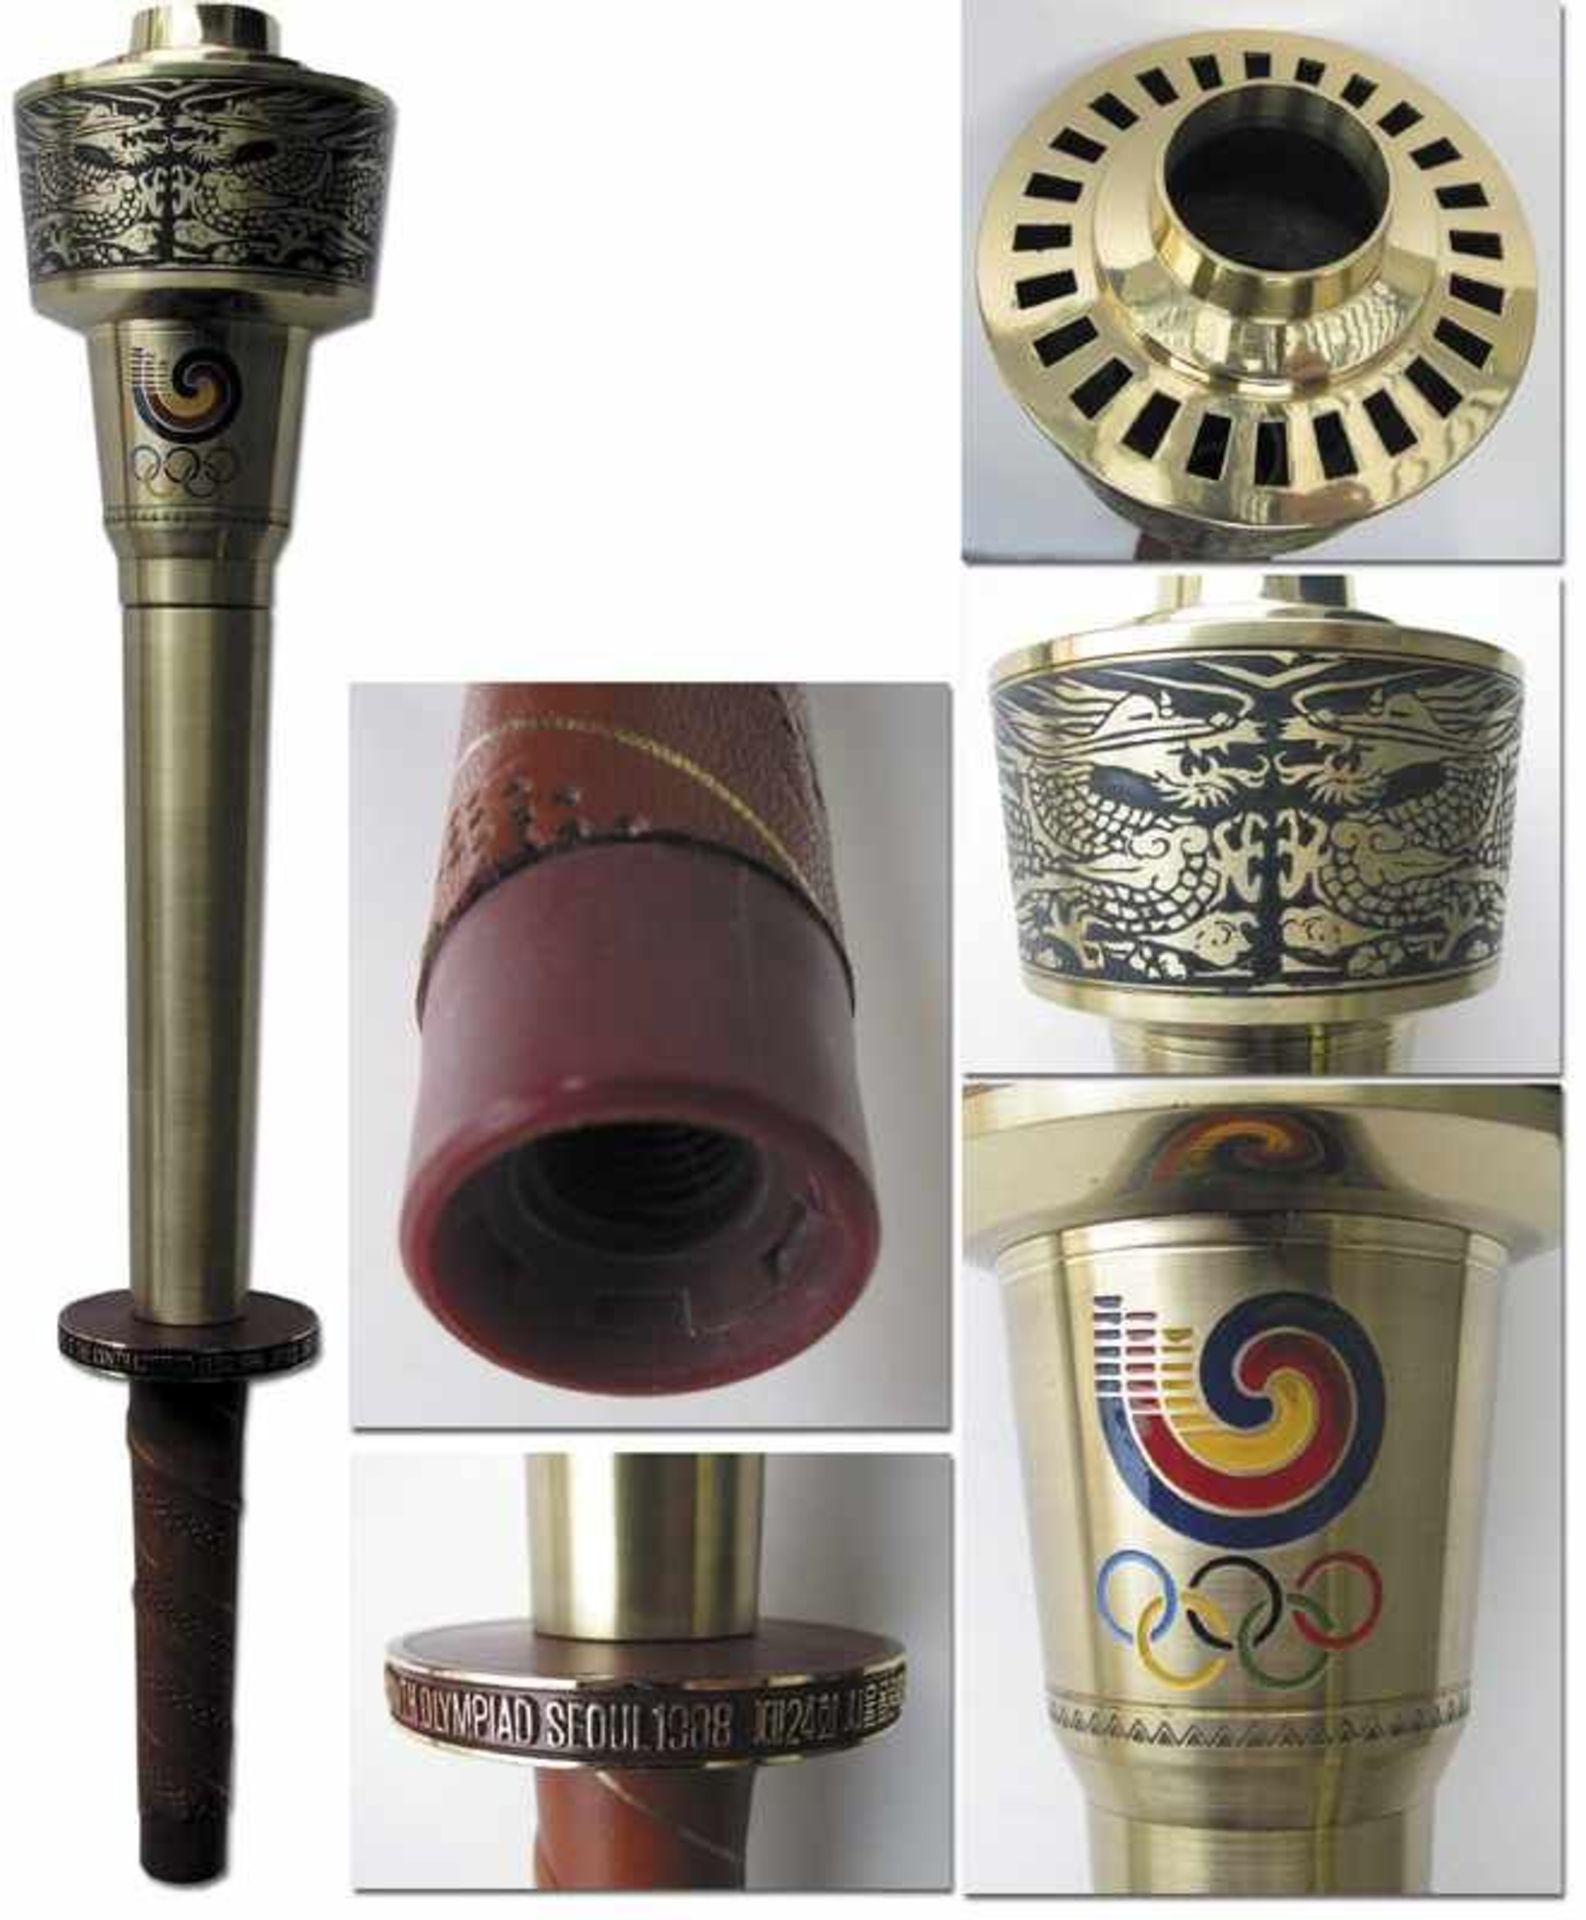 Olympic Games Seoul 1988 Original Torch - Original Olympic torch for the Olympic Games in Seoul